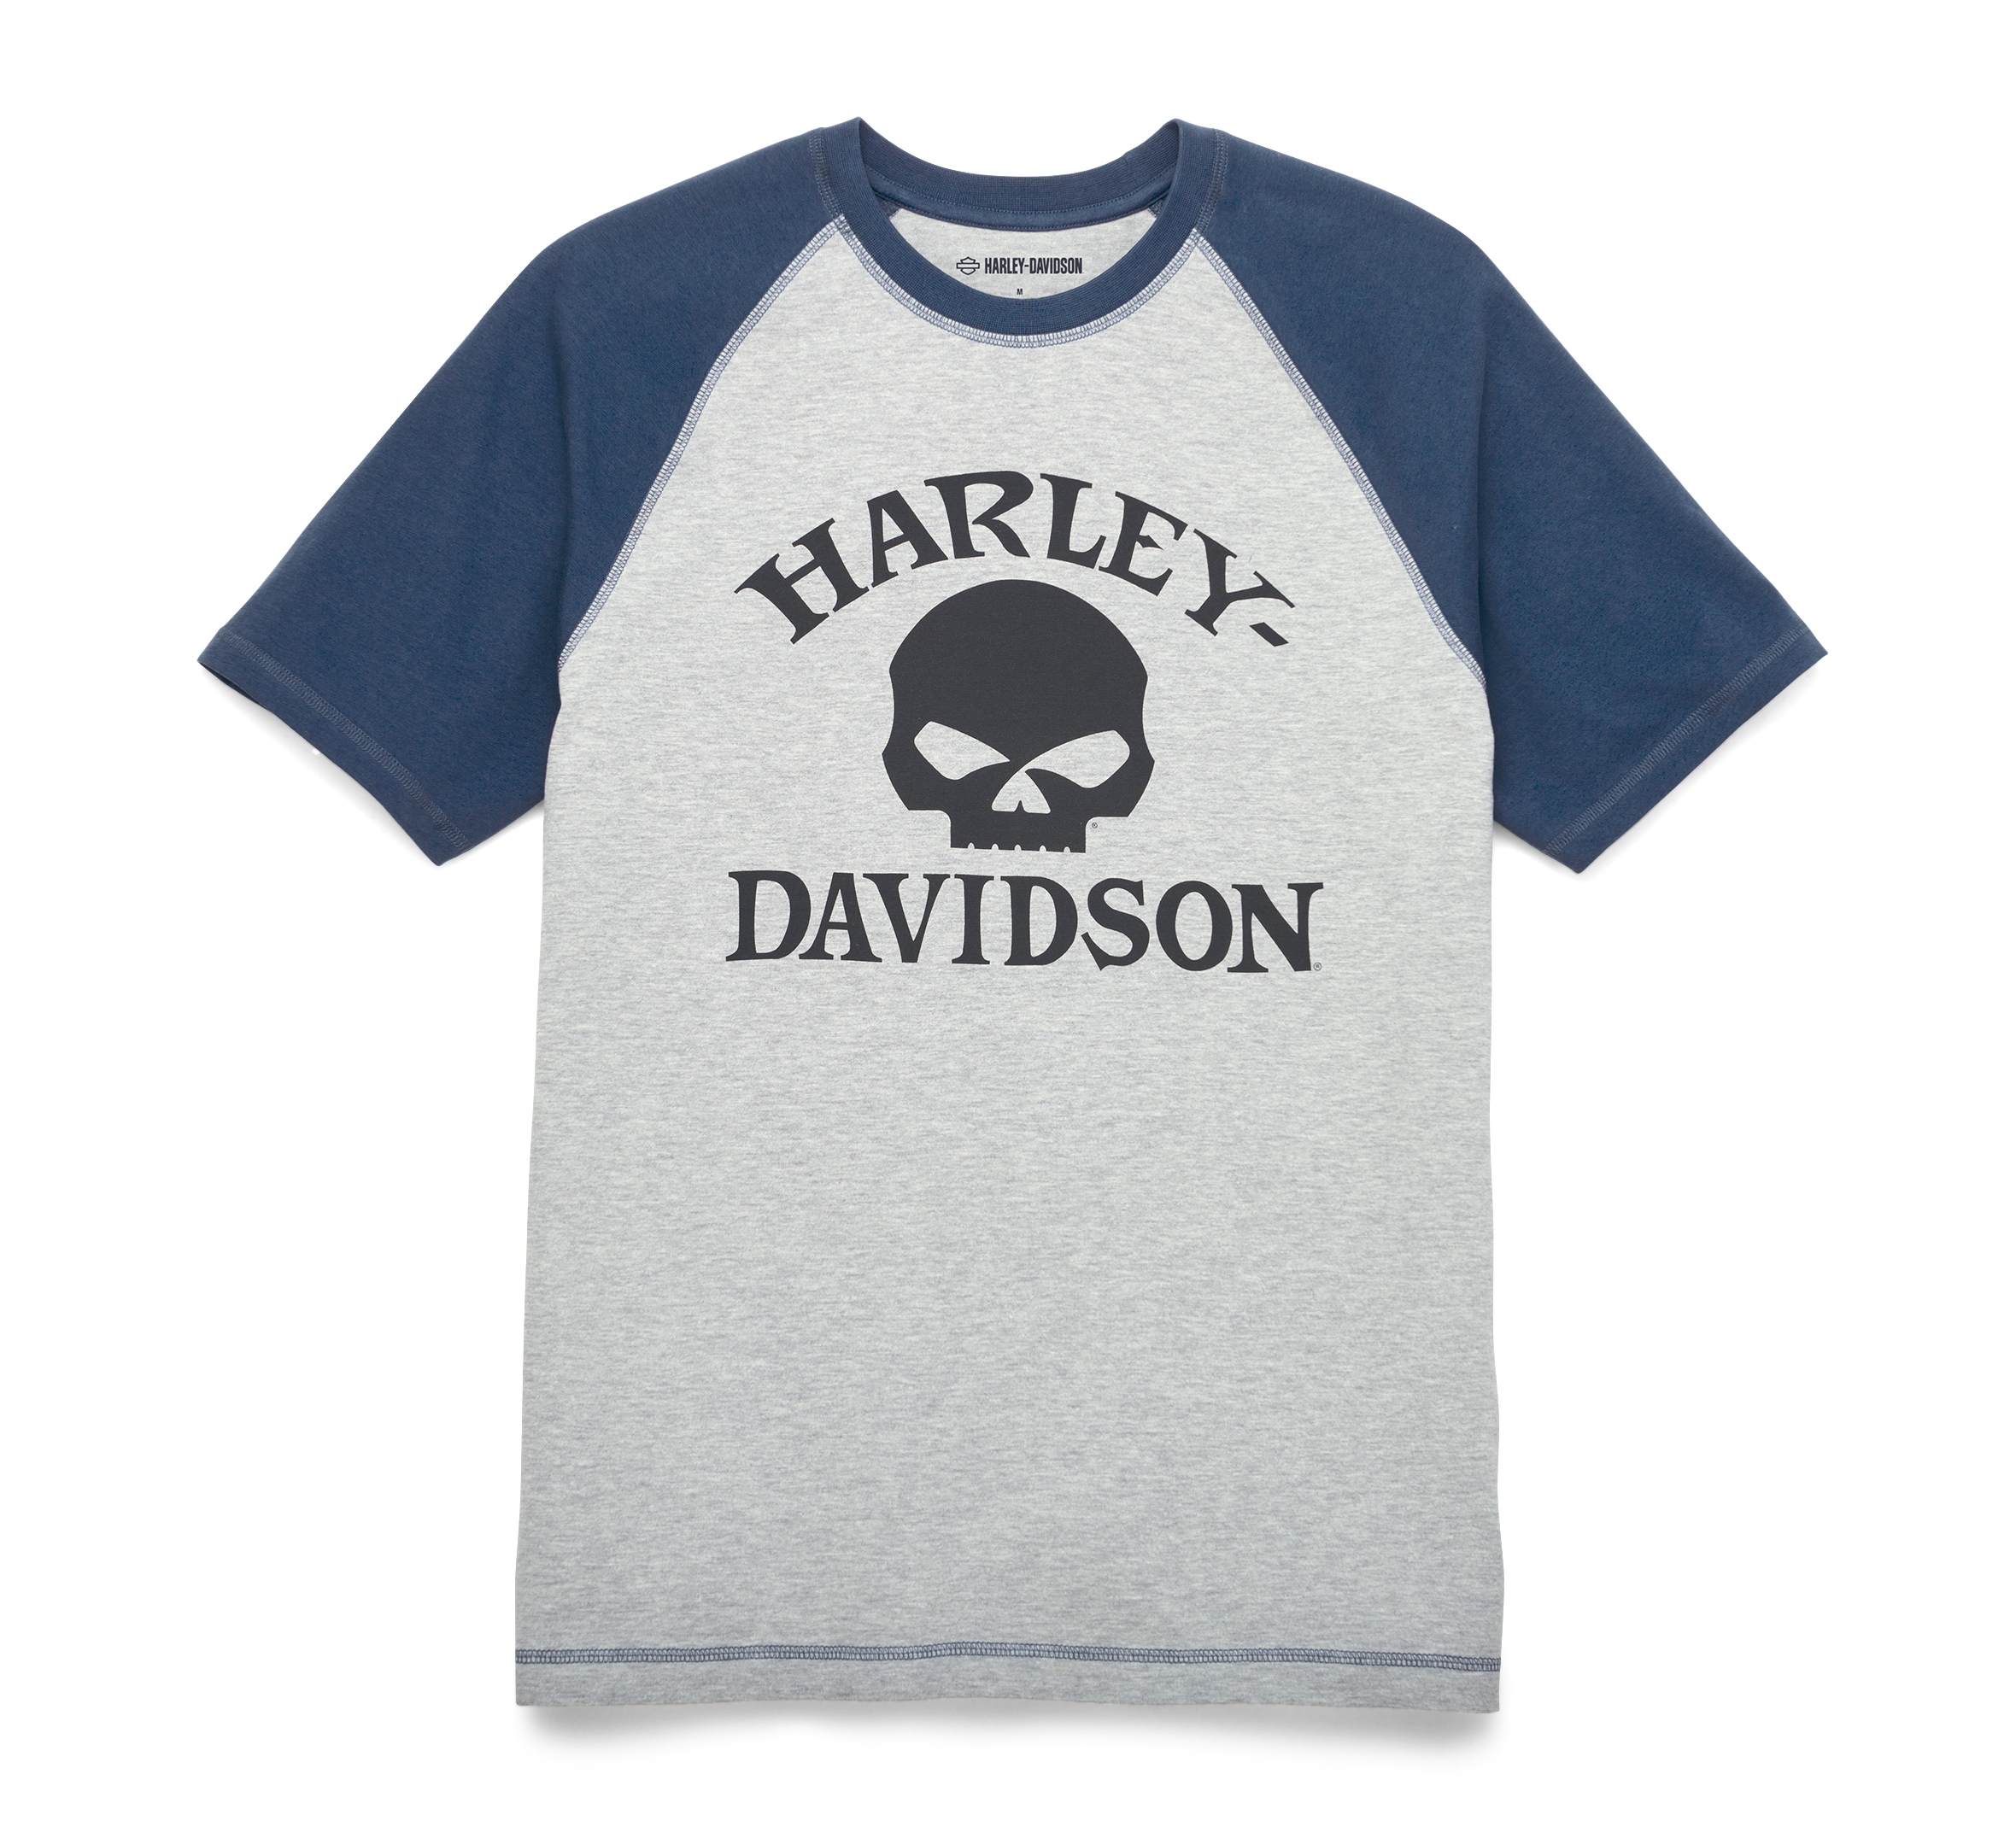 Harley-Davidson Men's Pinstripe Flames Short Sleeve Graphic T-Shirt 99031-17VM 